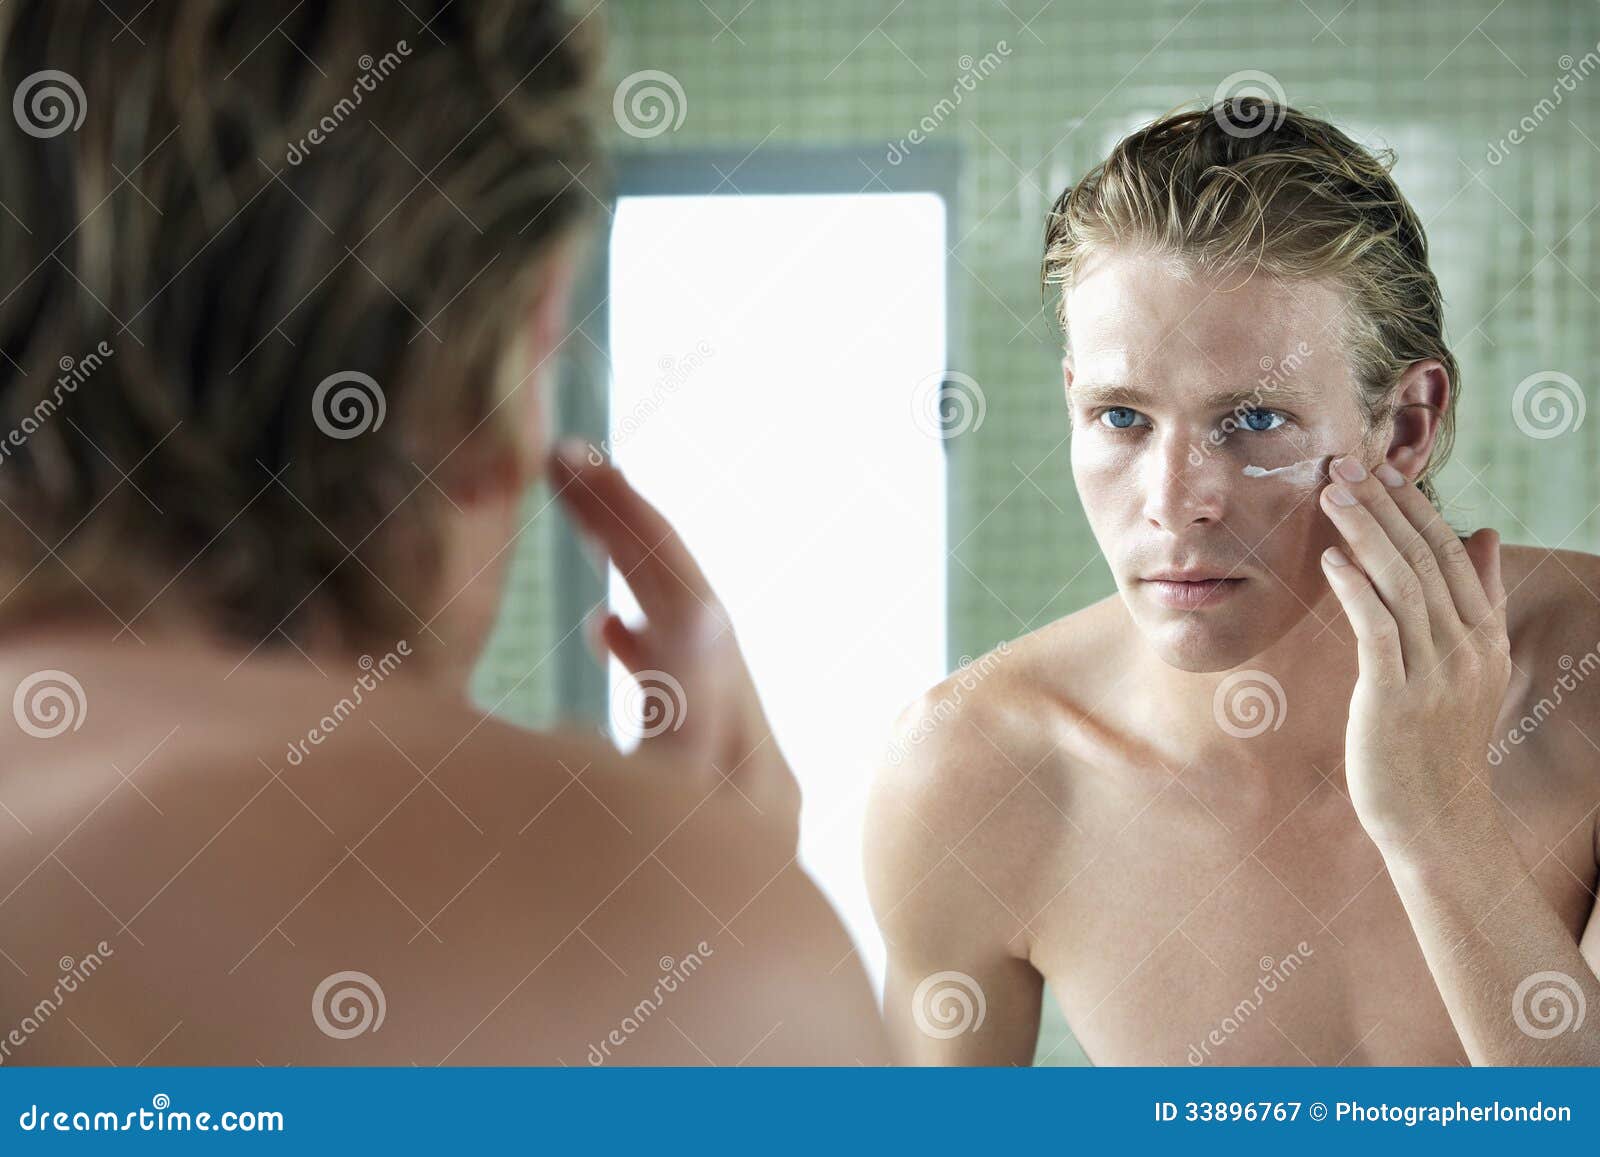 man applying moisturiser cream